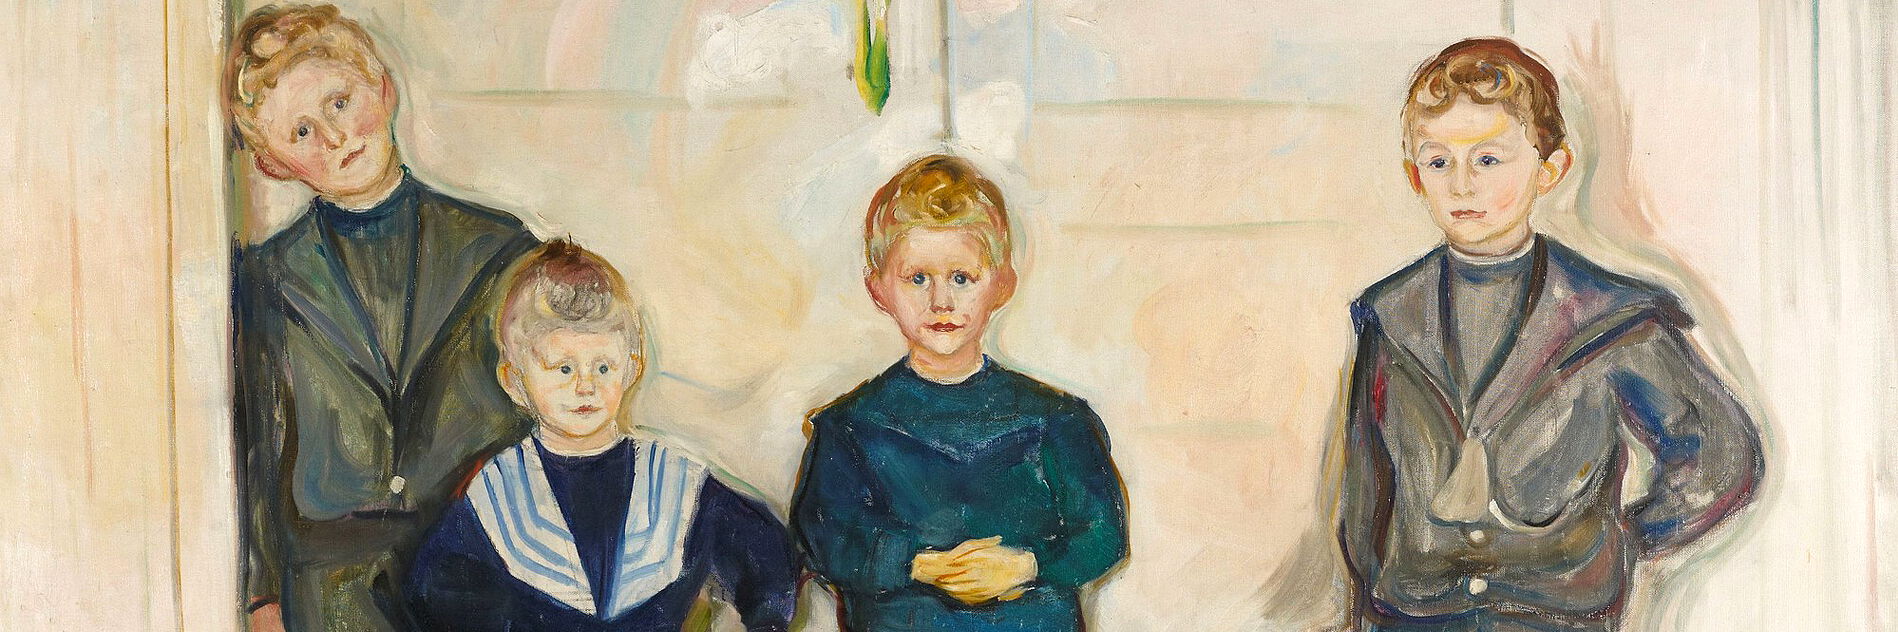 Edvard Munch - Die Söhne des Dr. Linde, Öl auf Leinwand, 1903